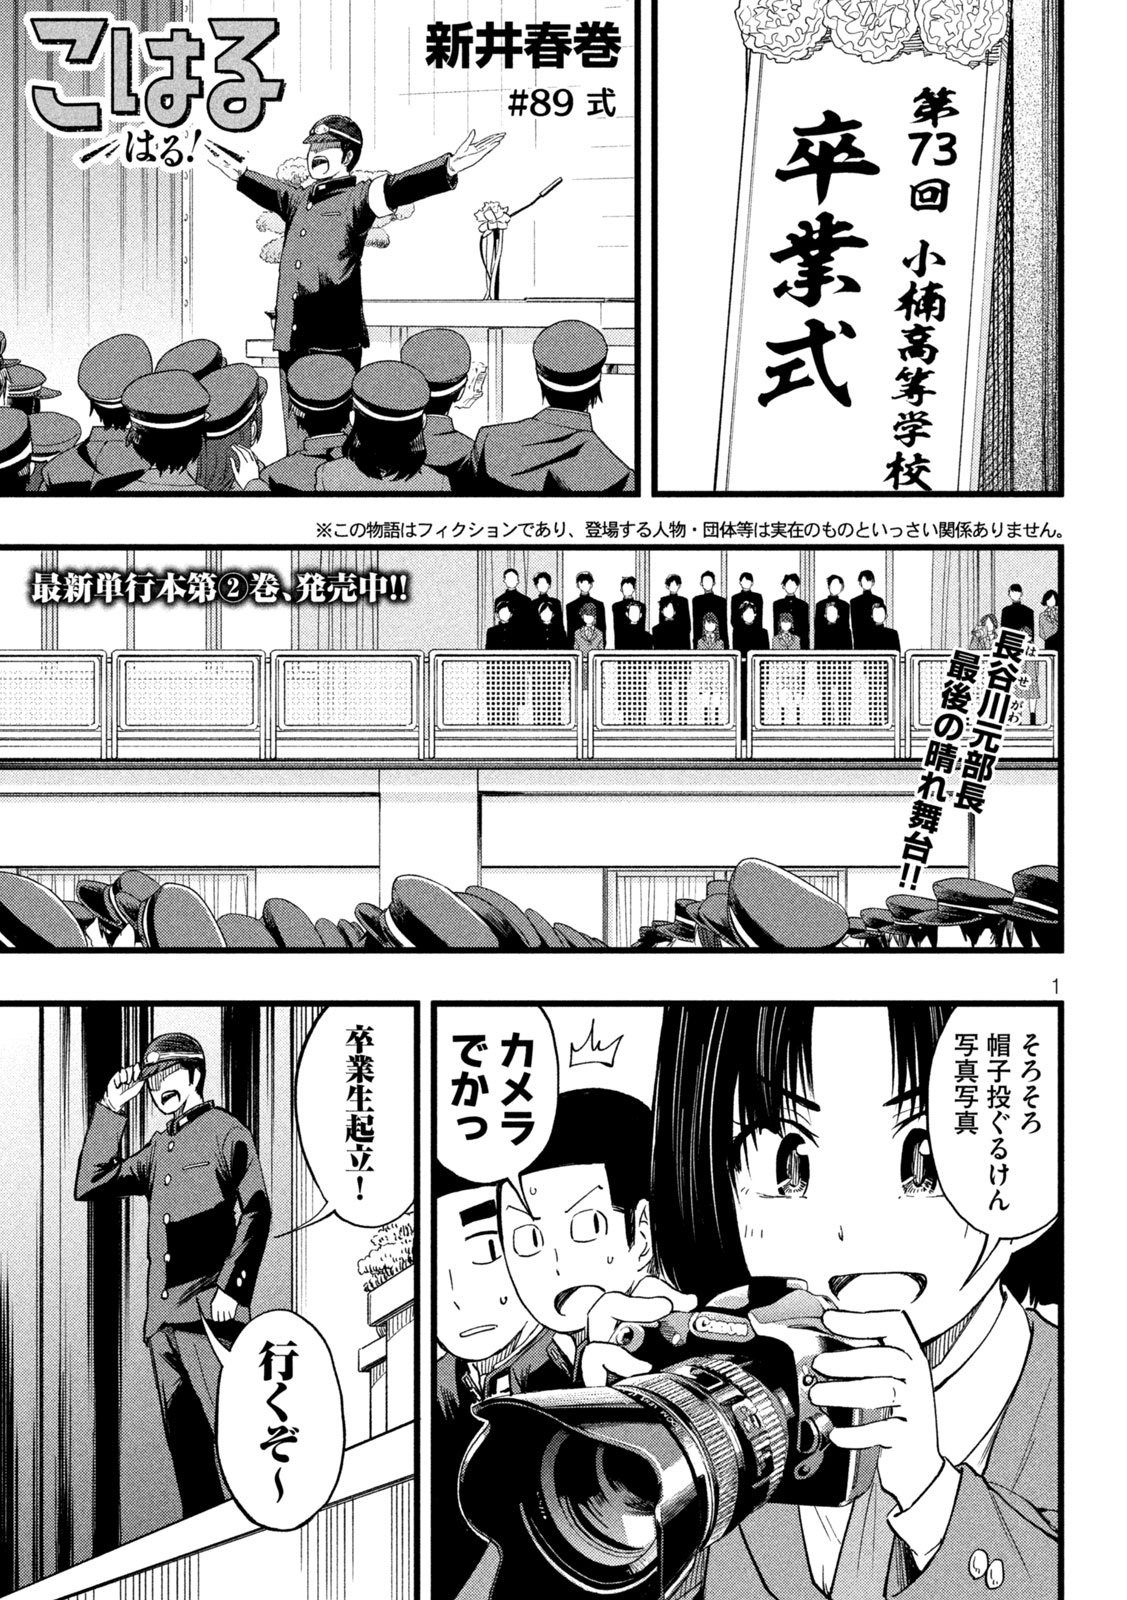 Koharu haru! - Chapter 89 - Page 1